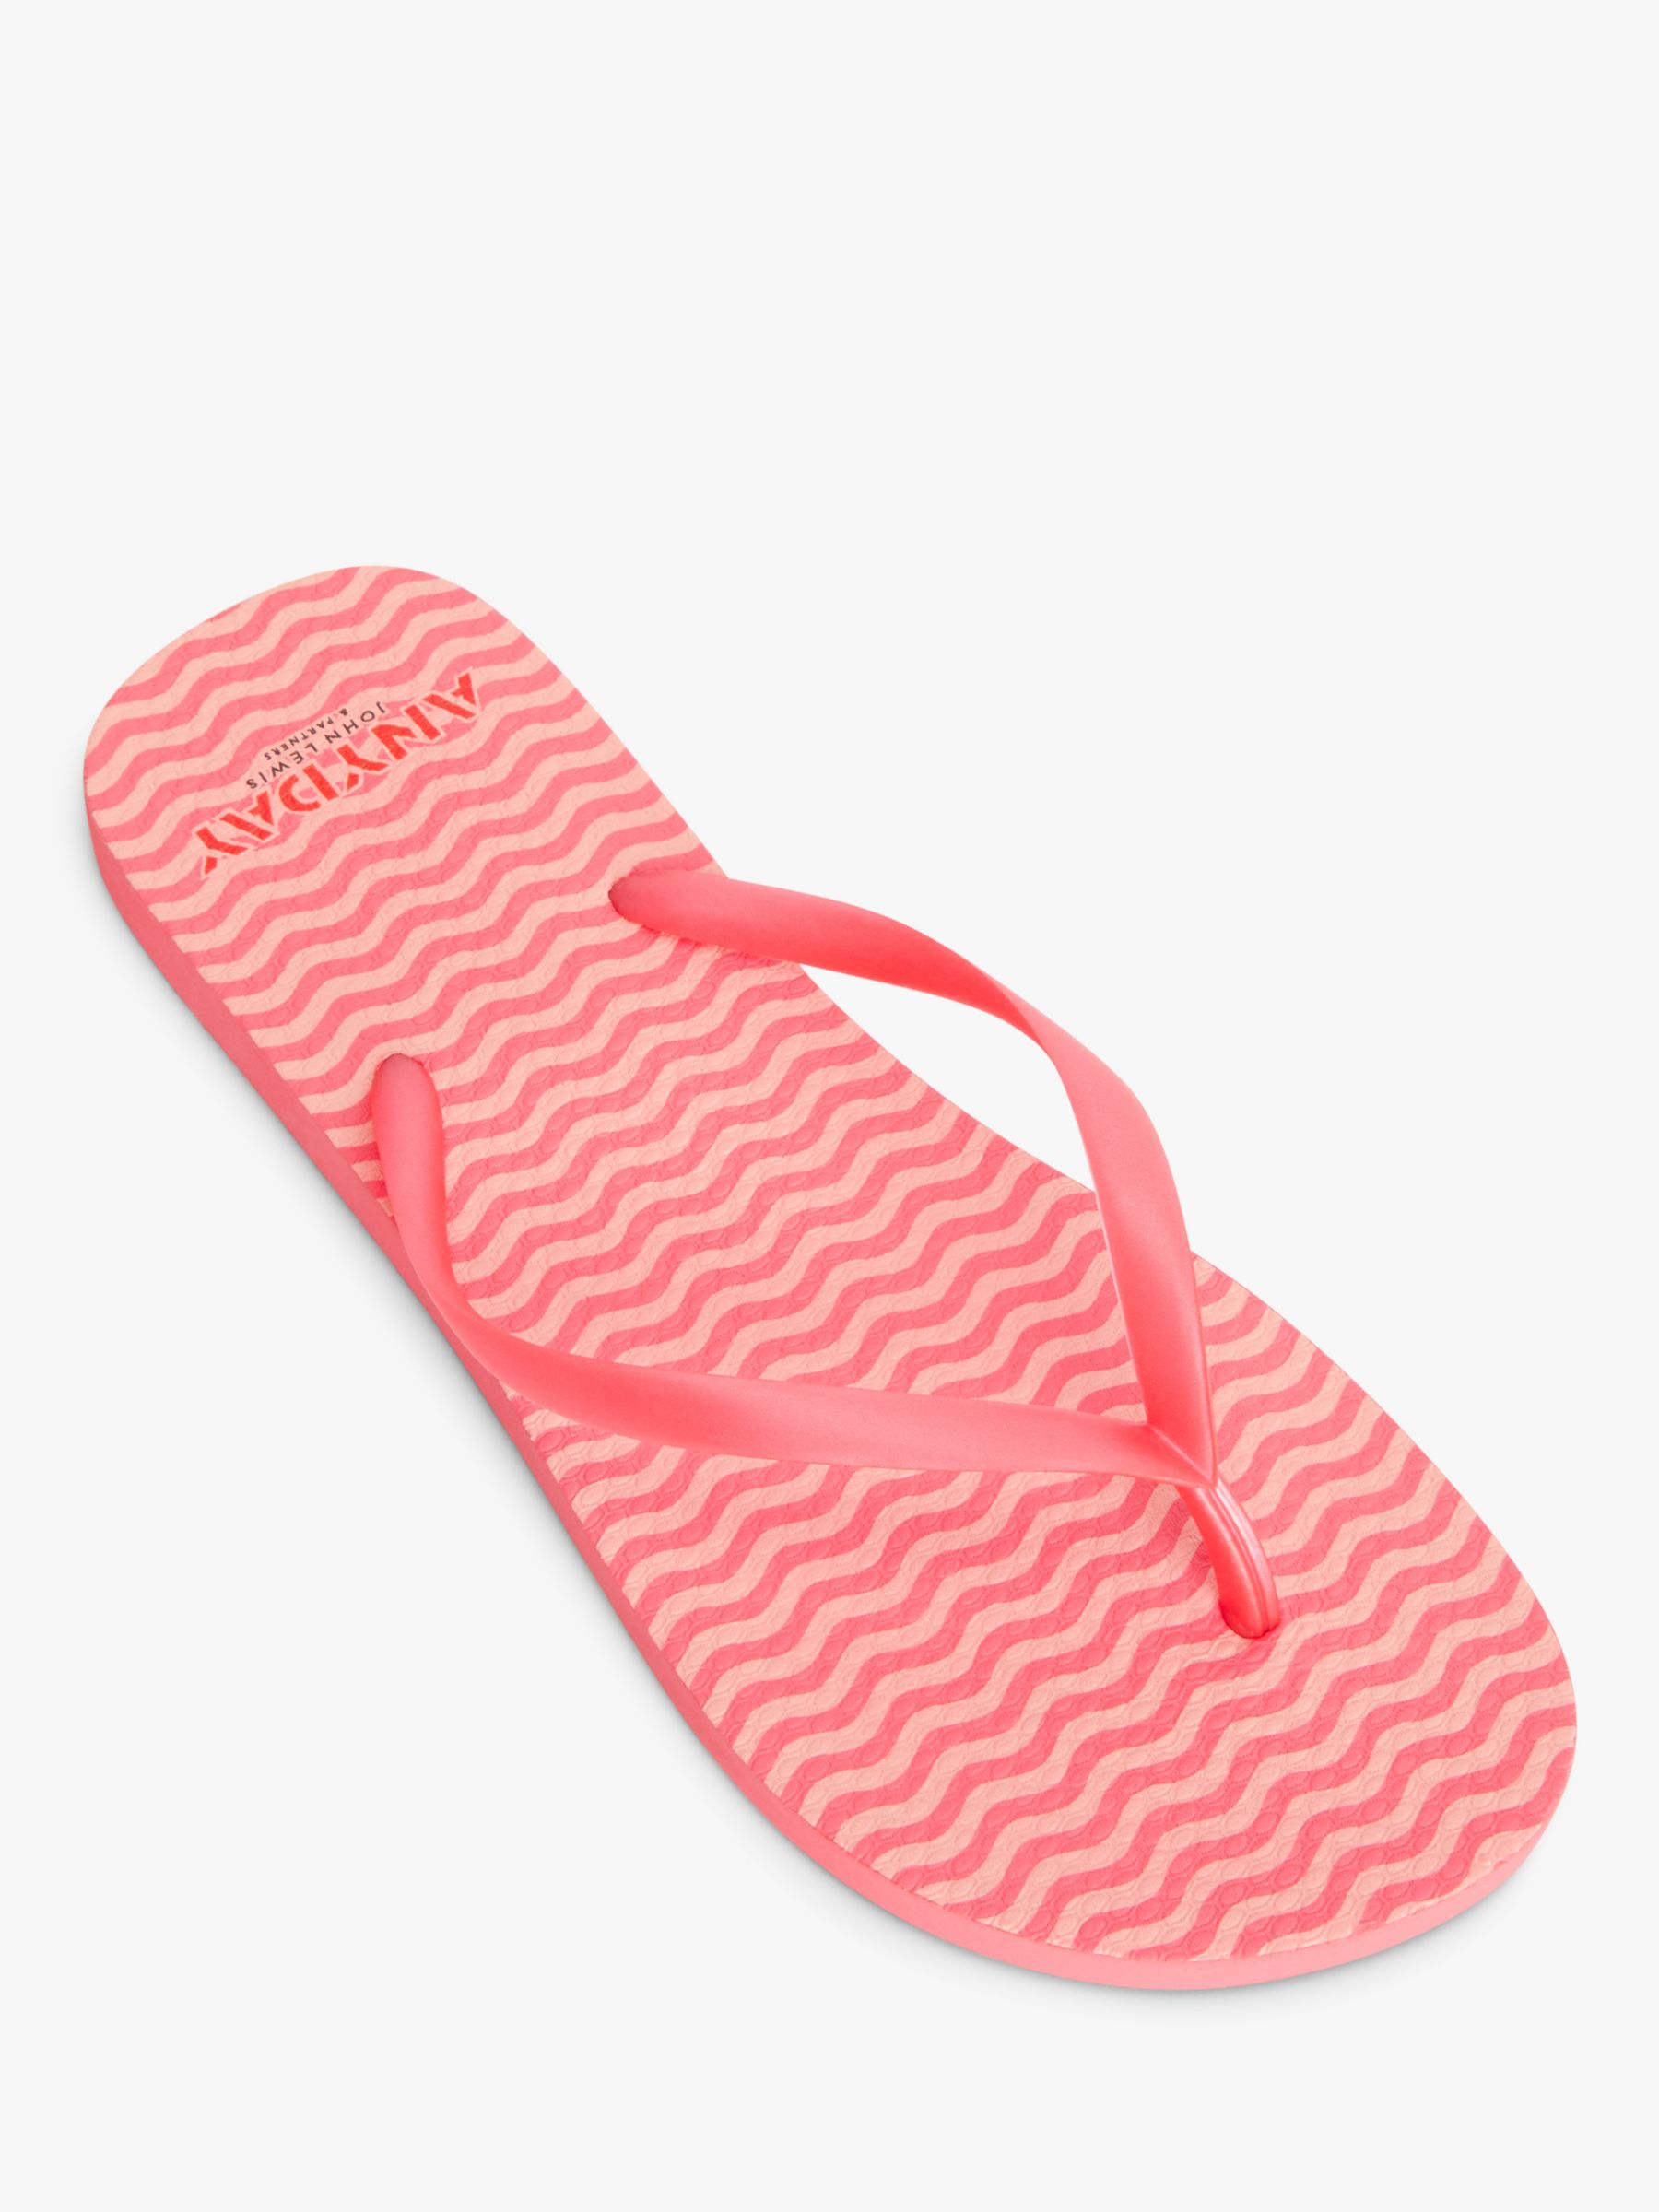 John Lewis ANYDAY Long Island Slim Strap Recycled Rubber Flip-Flops, Pink/Multi